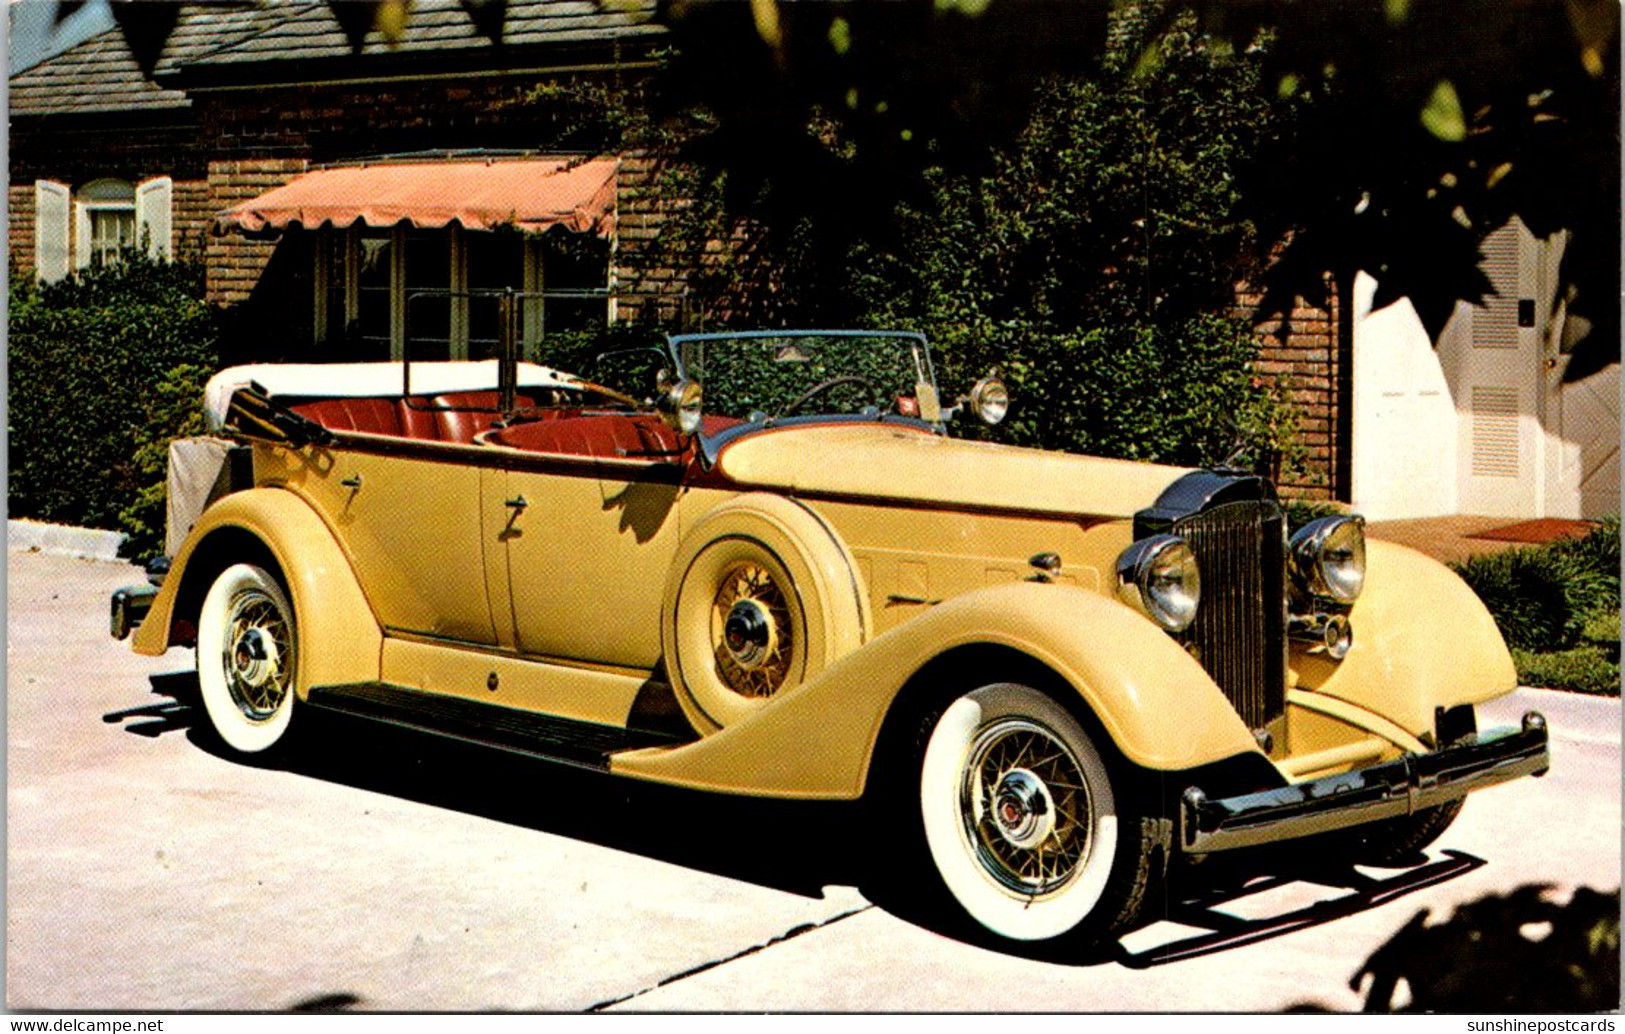 1934 Packard Super Eight Dual Cowl Phaeton Horseless Carriages & Antiques Muskogee Oklahoma 1981 - Muskogee